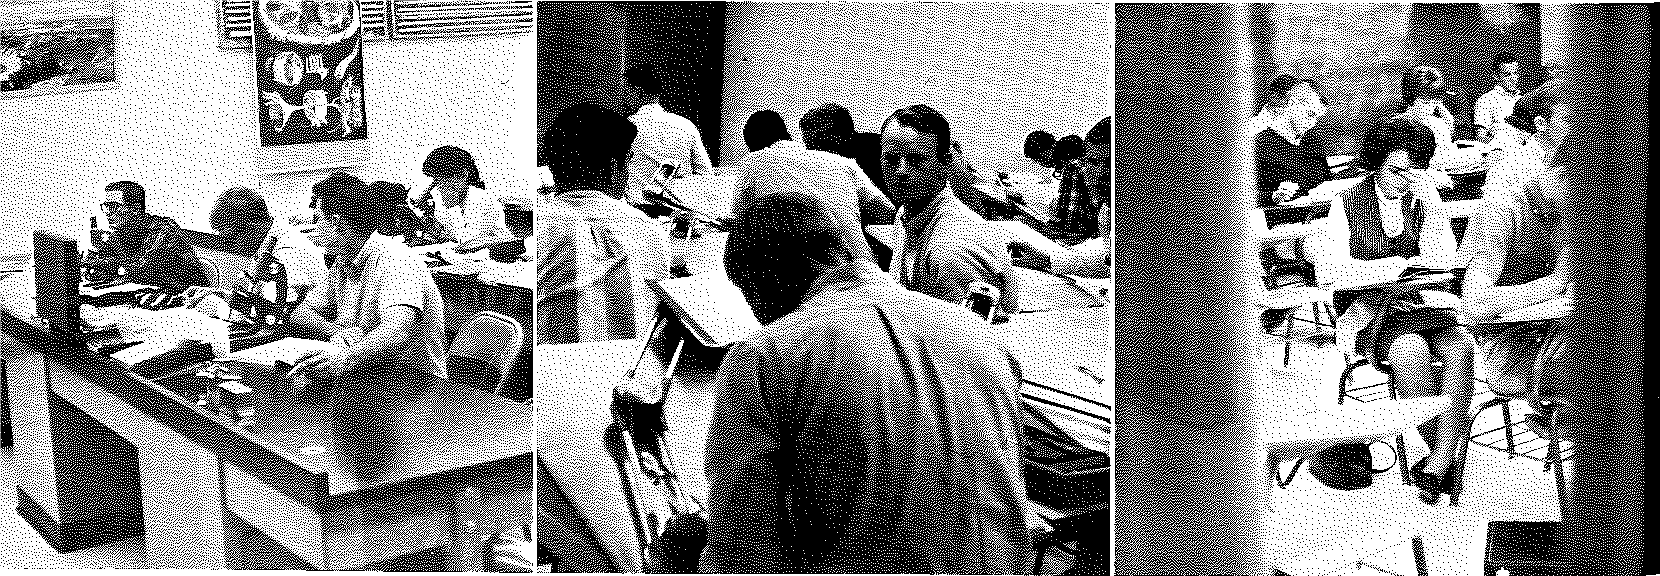  1966 Classroom